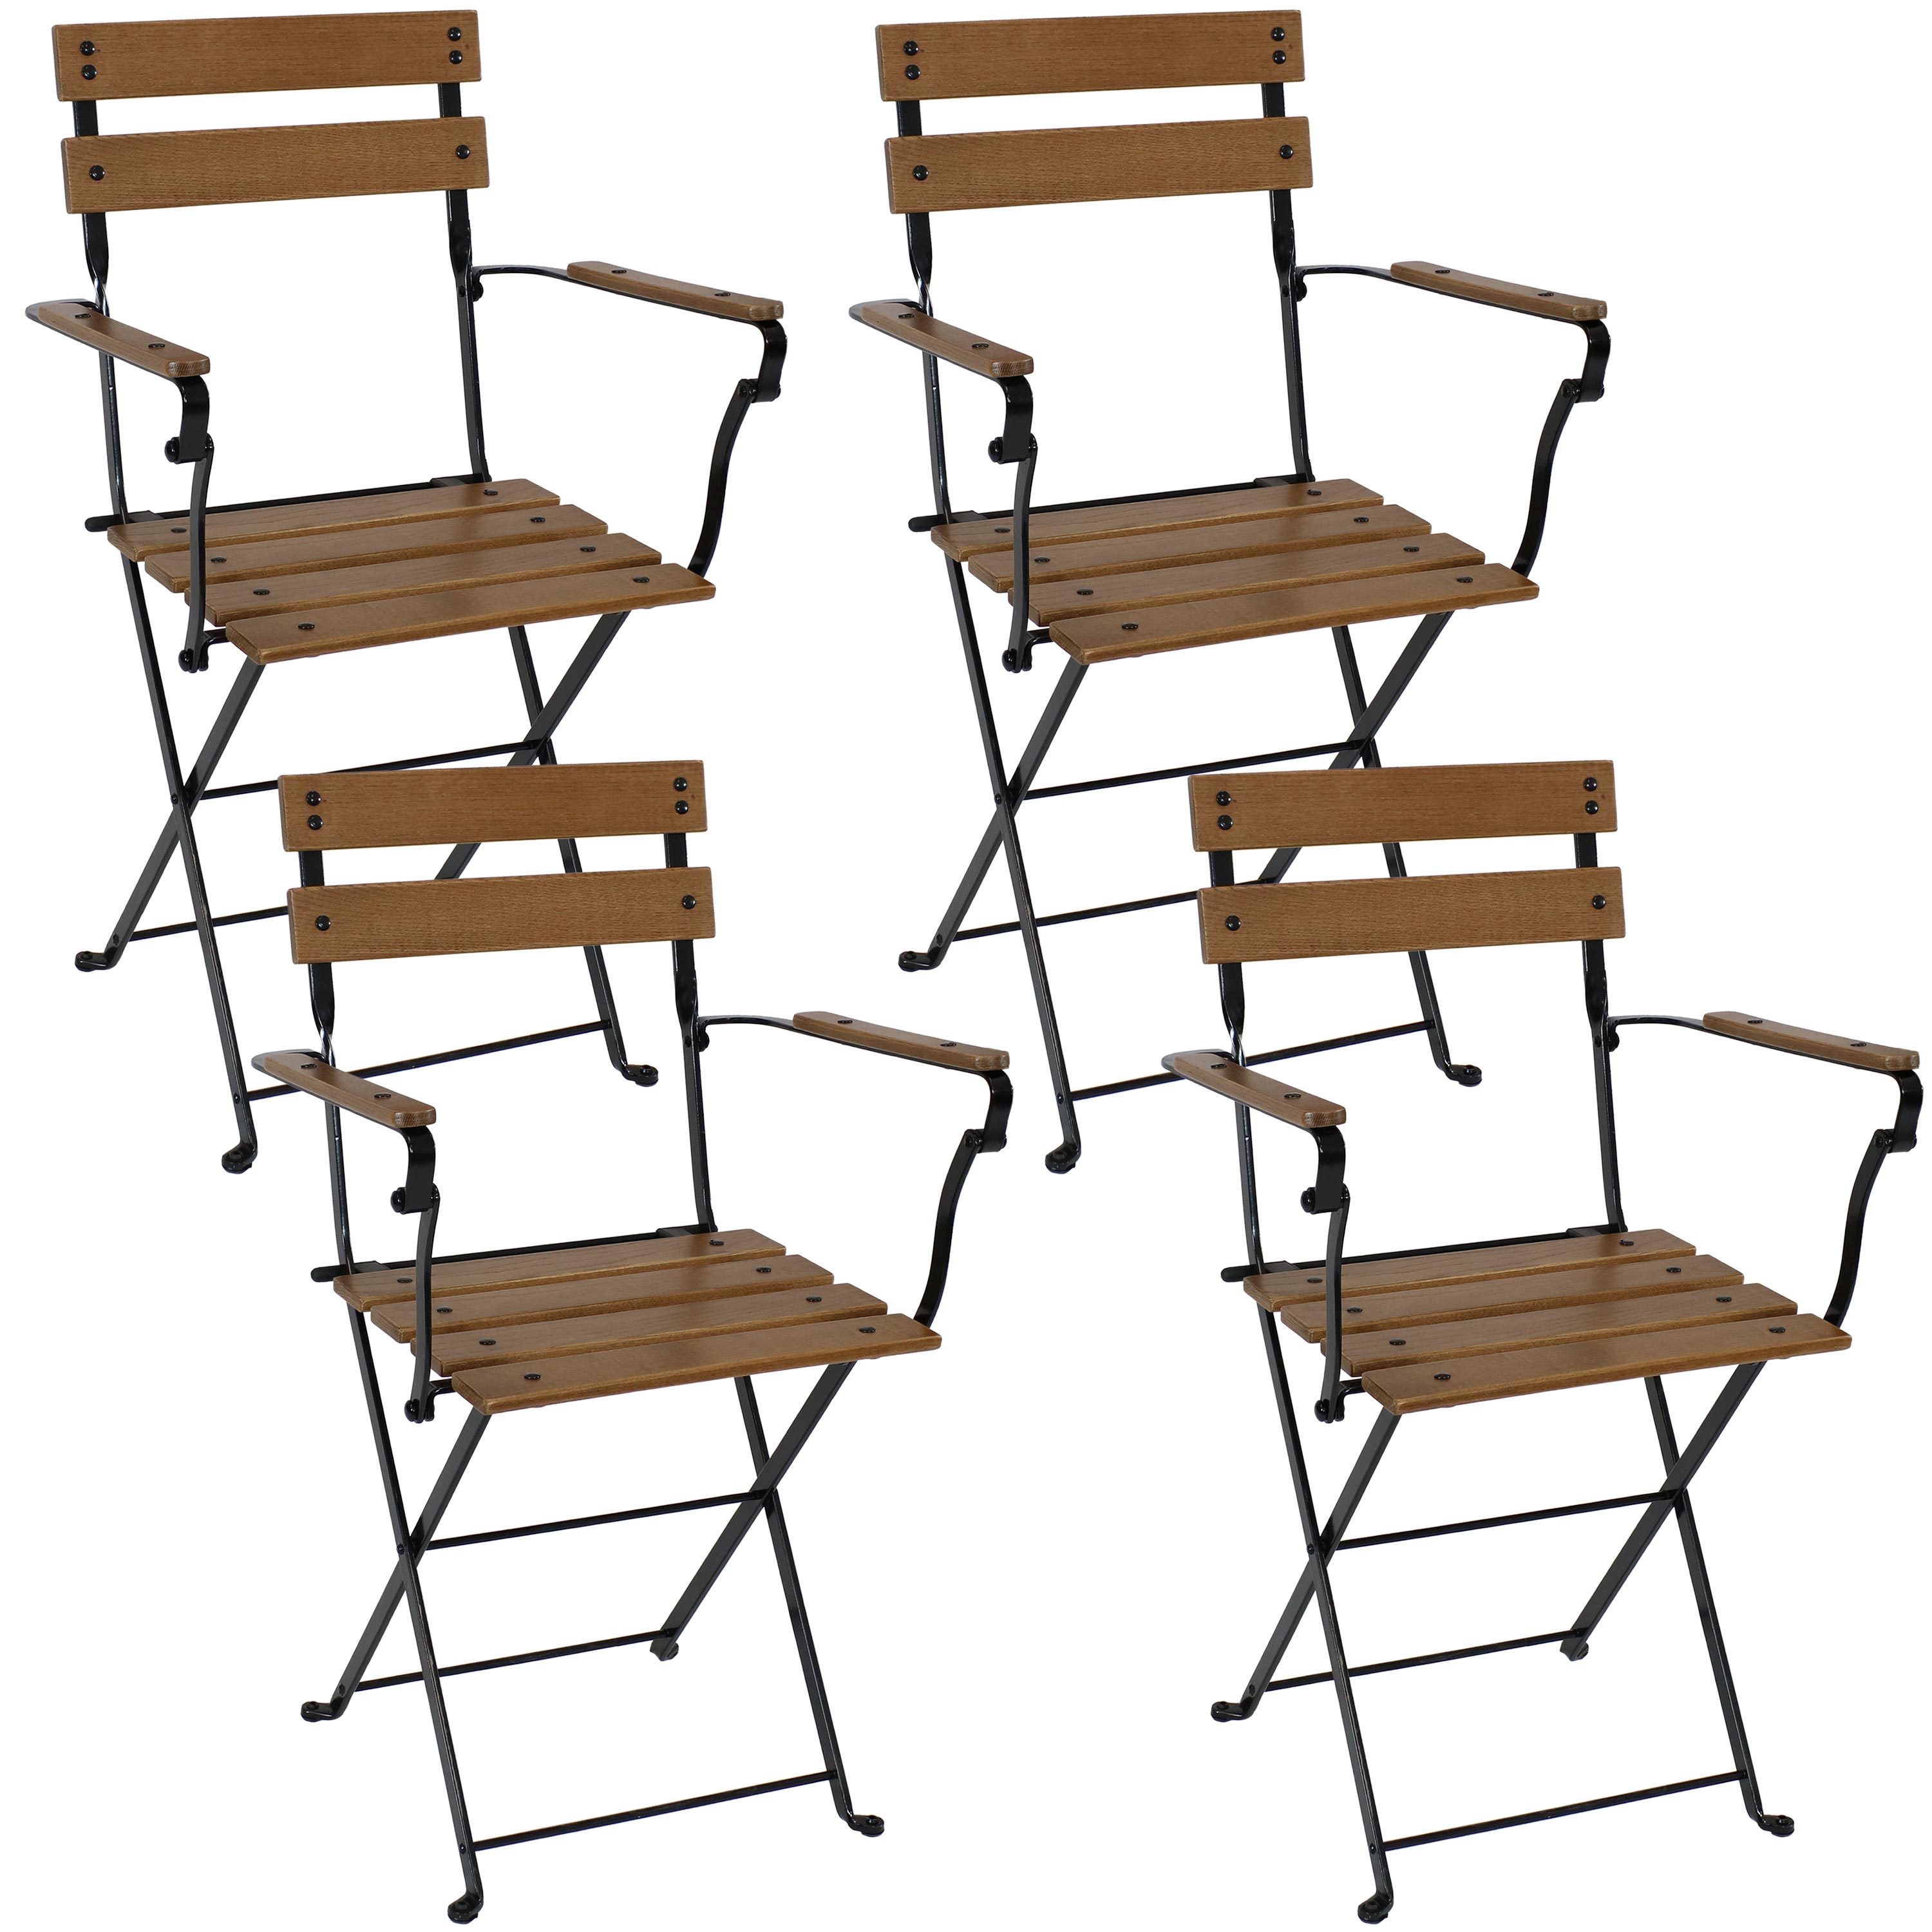 Sunnydaze Basic European Chestnut Wood Folding Bistro Chair with Arms - Set of 4